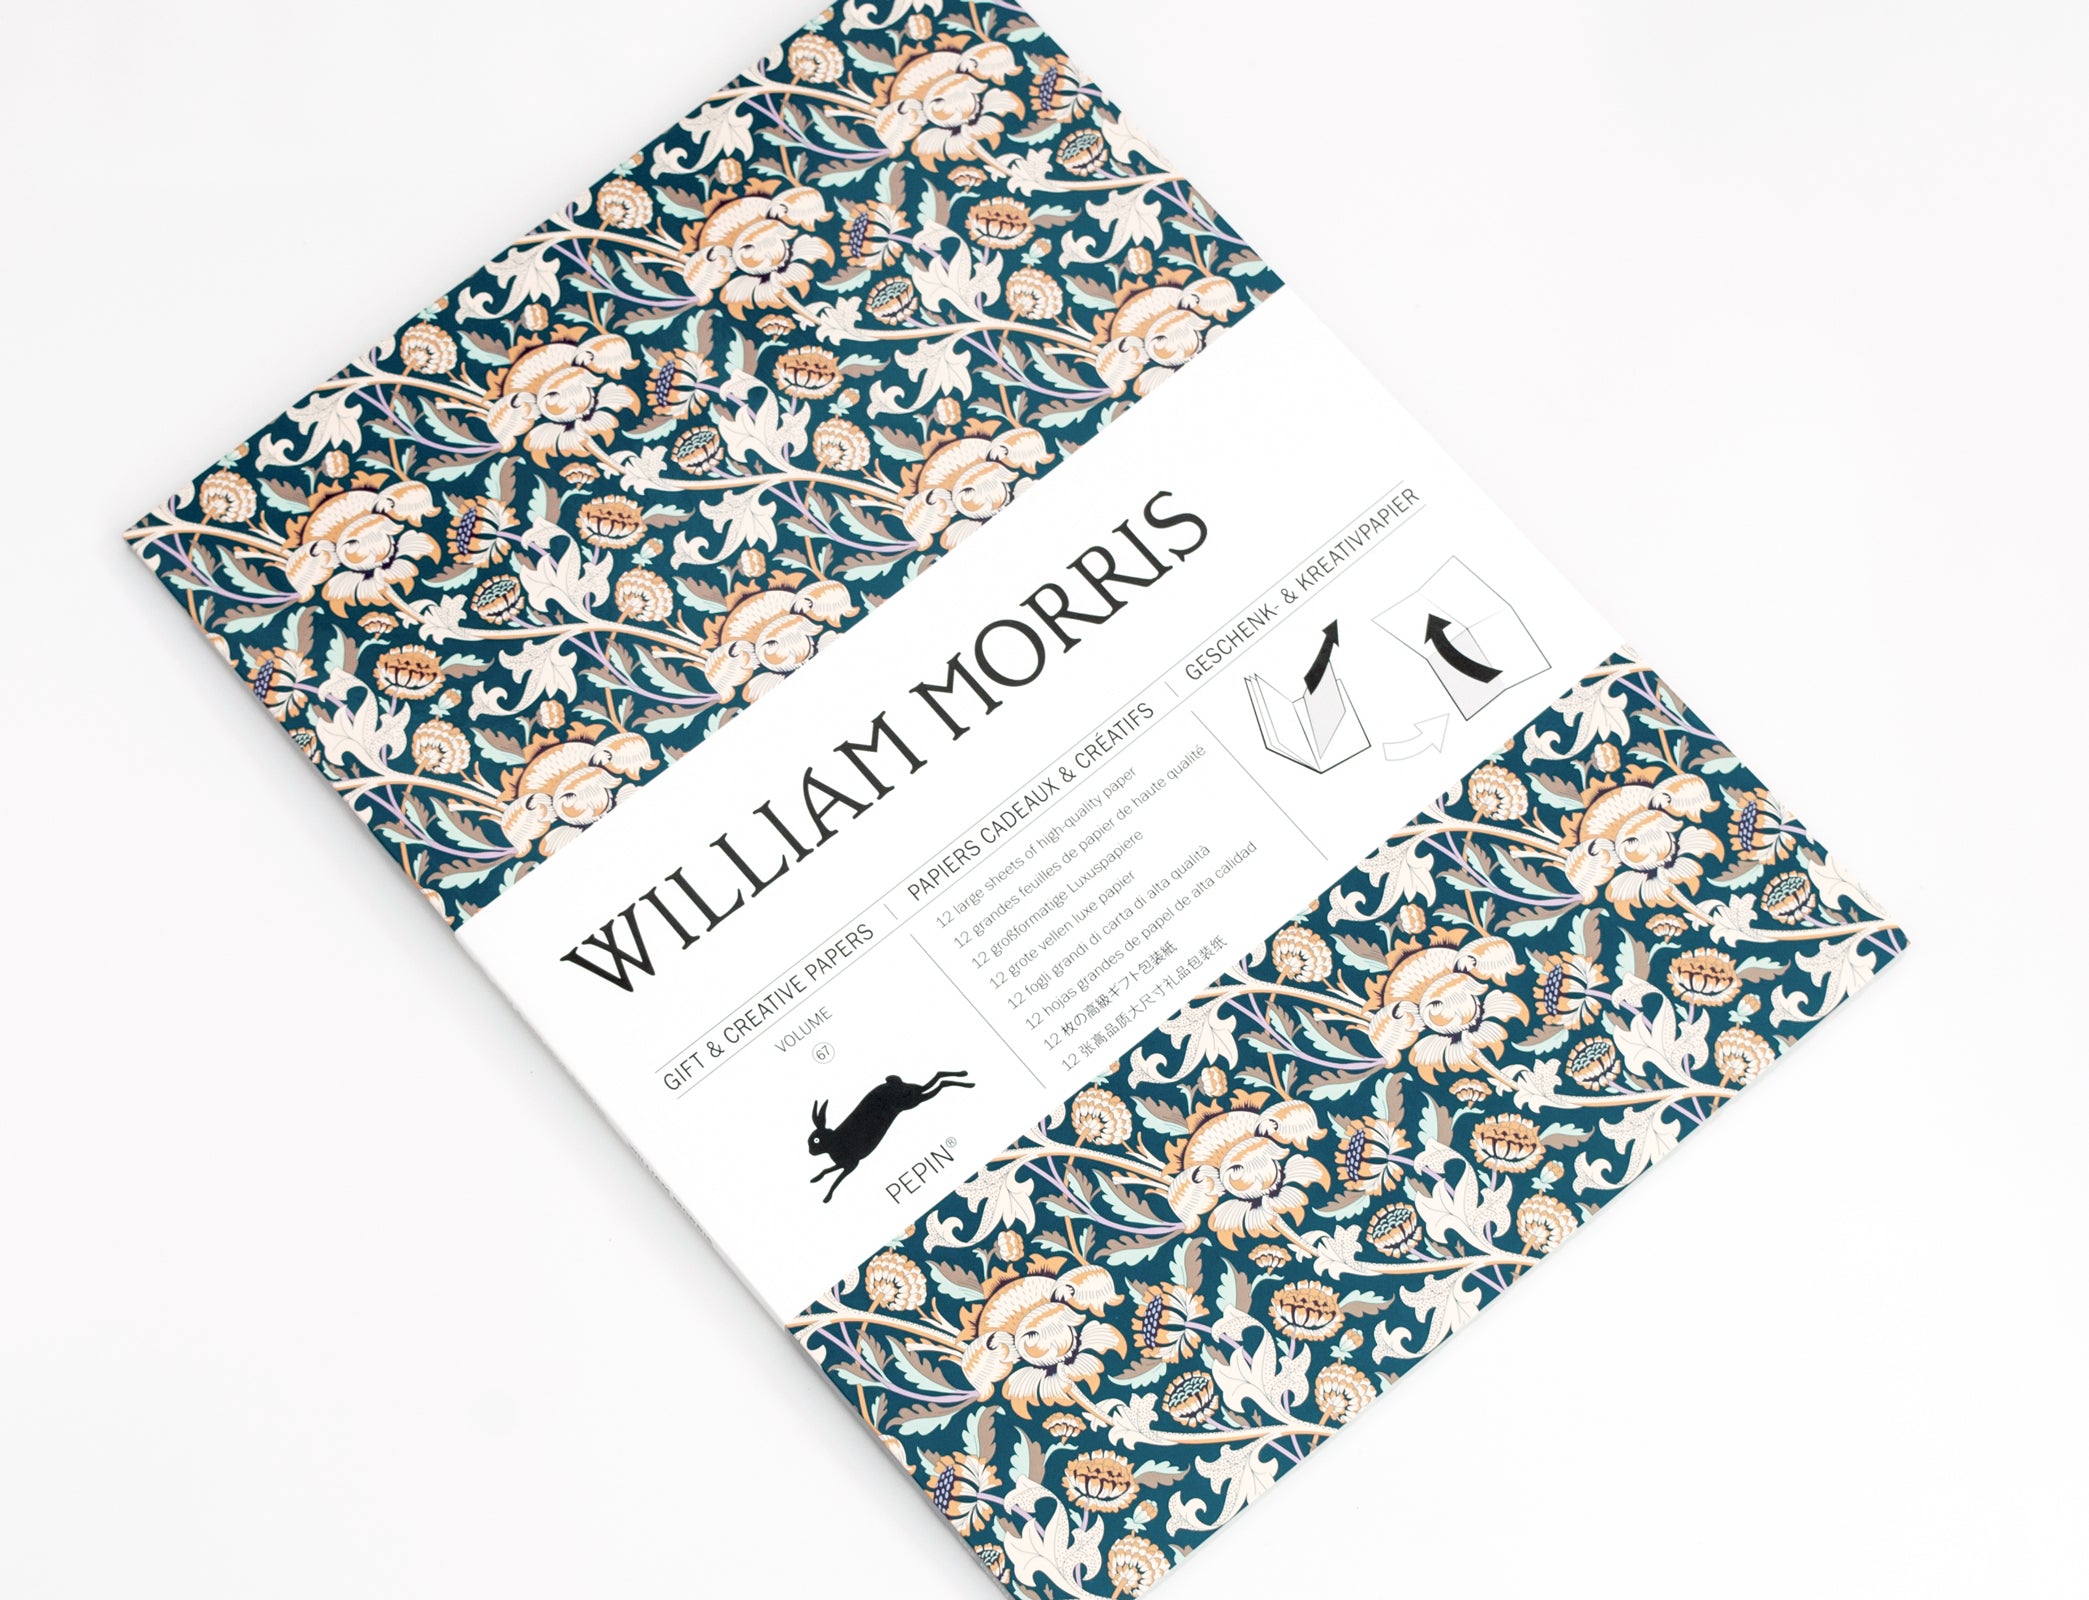 Gift & creative papers - William Morris